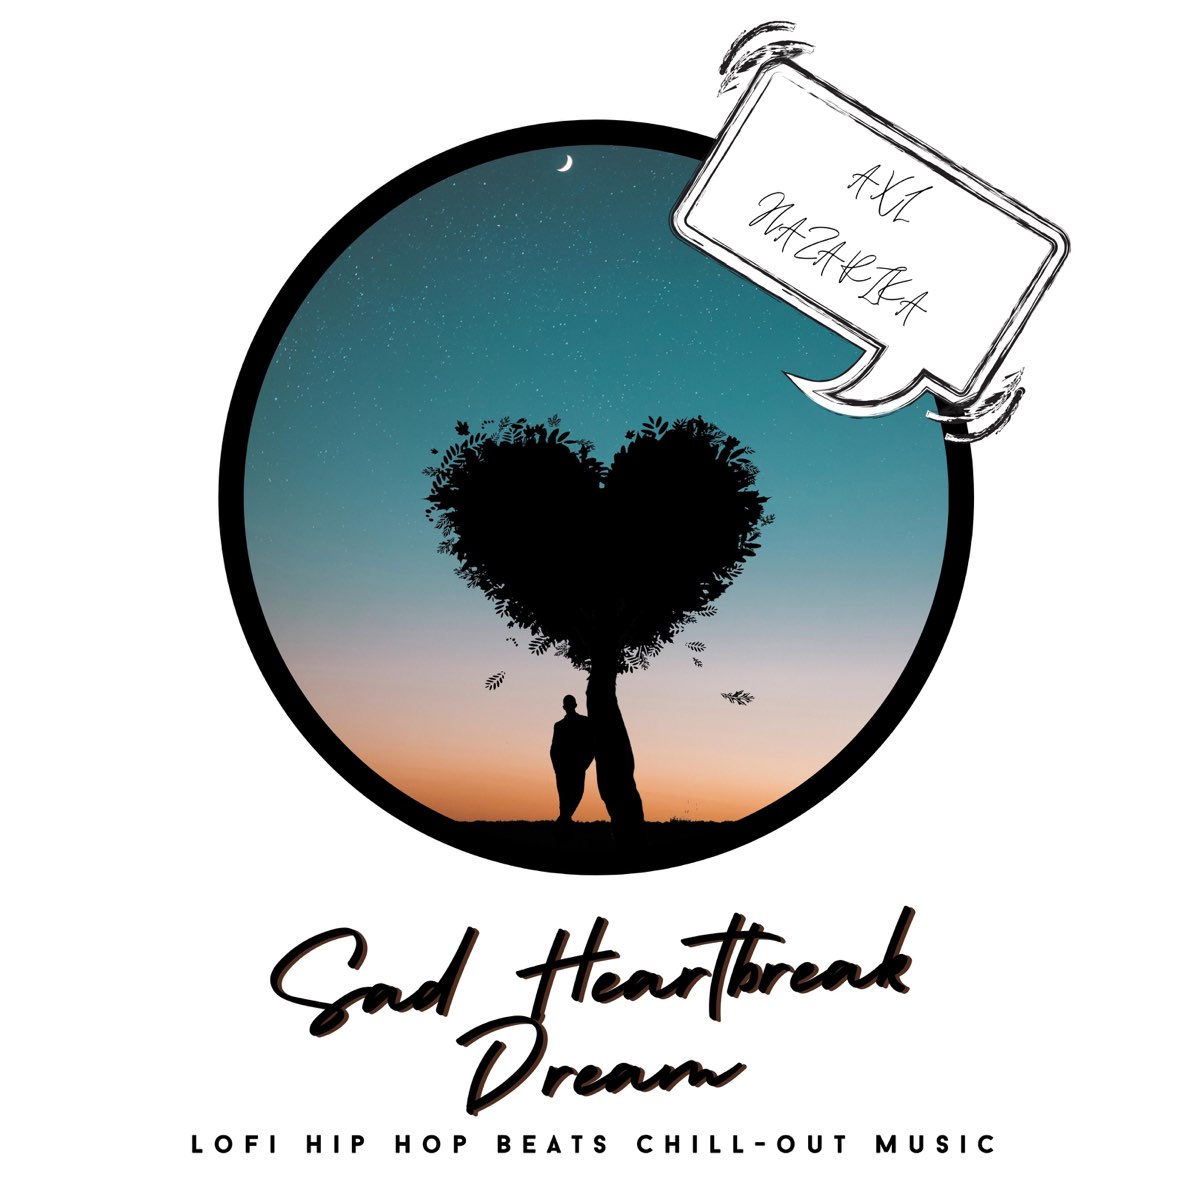 Sad Heartbreak Dream (Lofi Hip Hop Beats Chill-Out Music) - Single by Axl  Hazarika on Apple Music